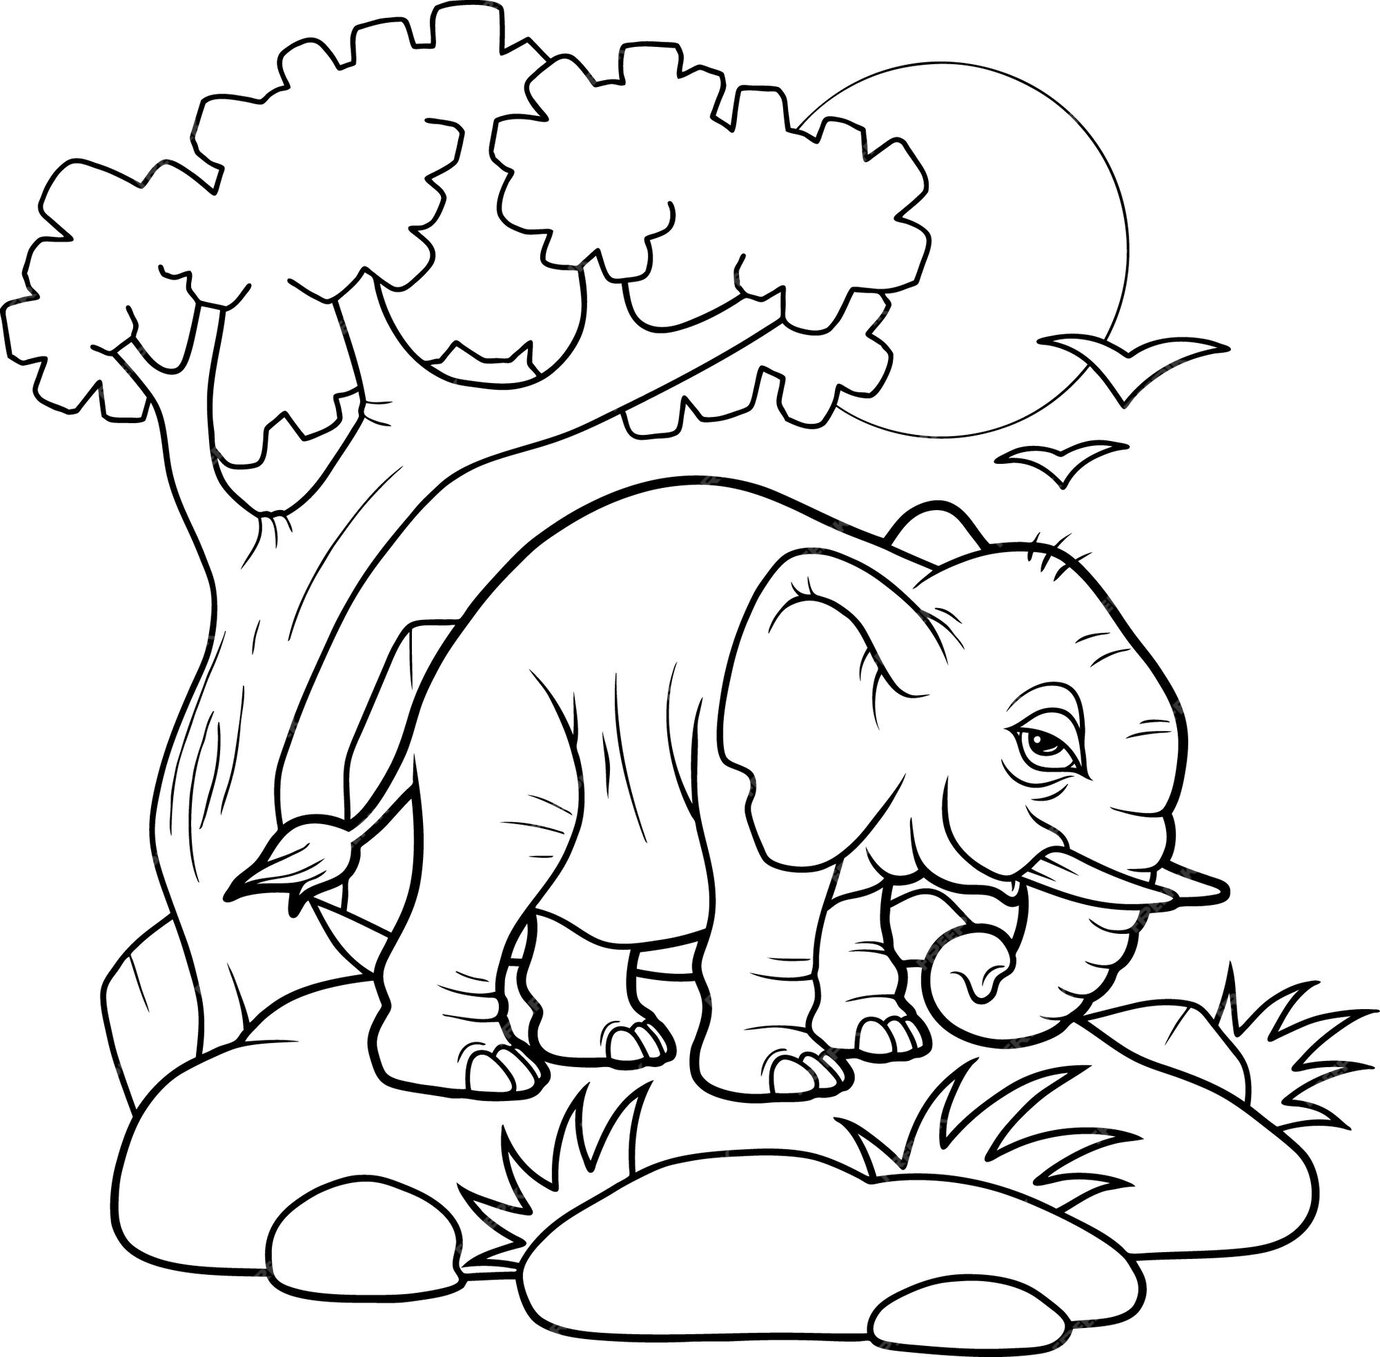 Premium Vector | Cartoon funny elephant coloring book